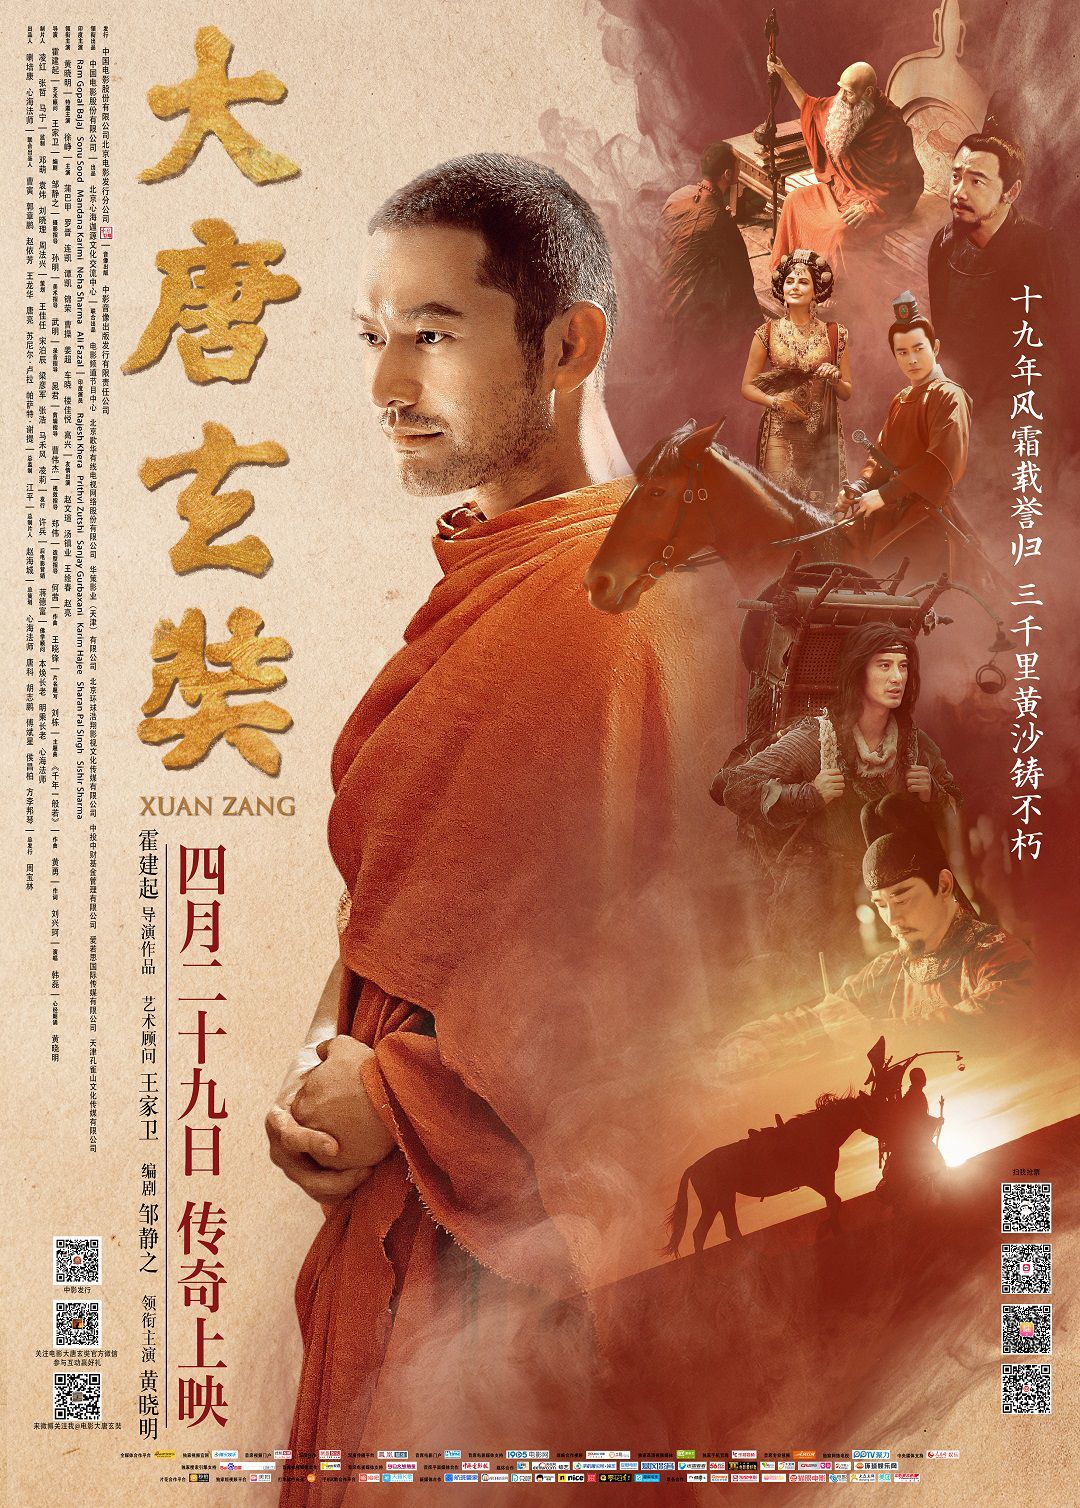 Xuanzang Monk Film Poster.jpg